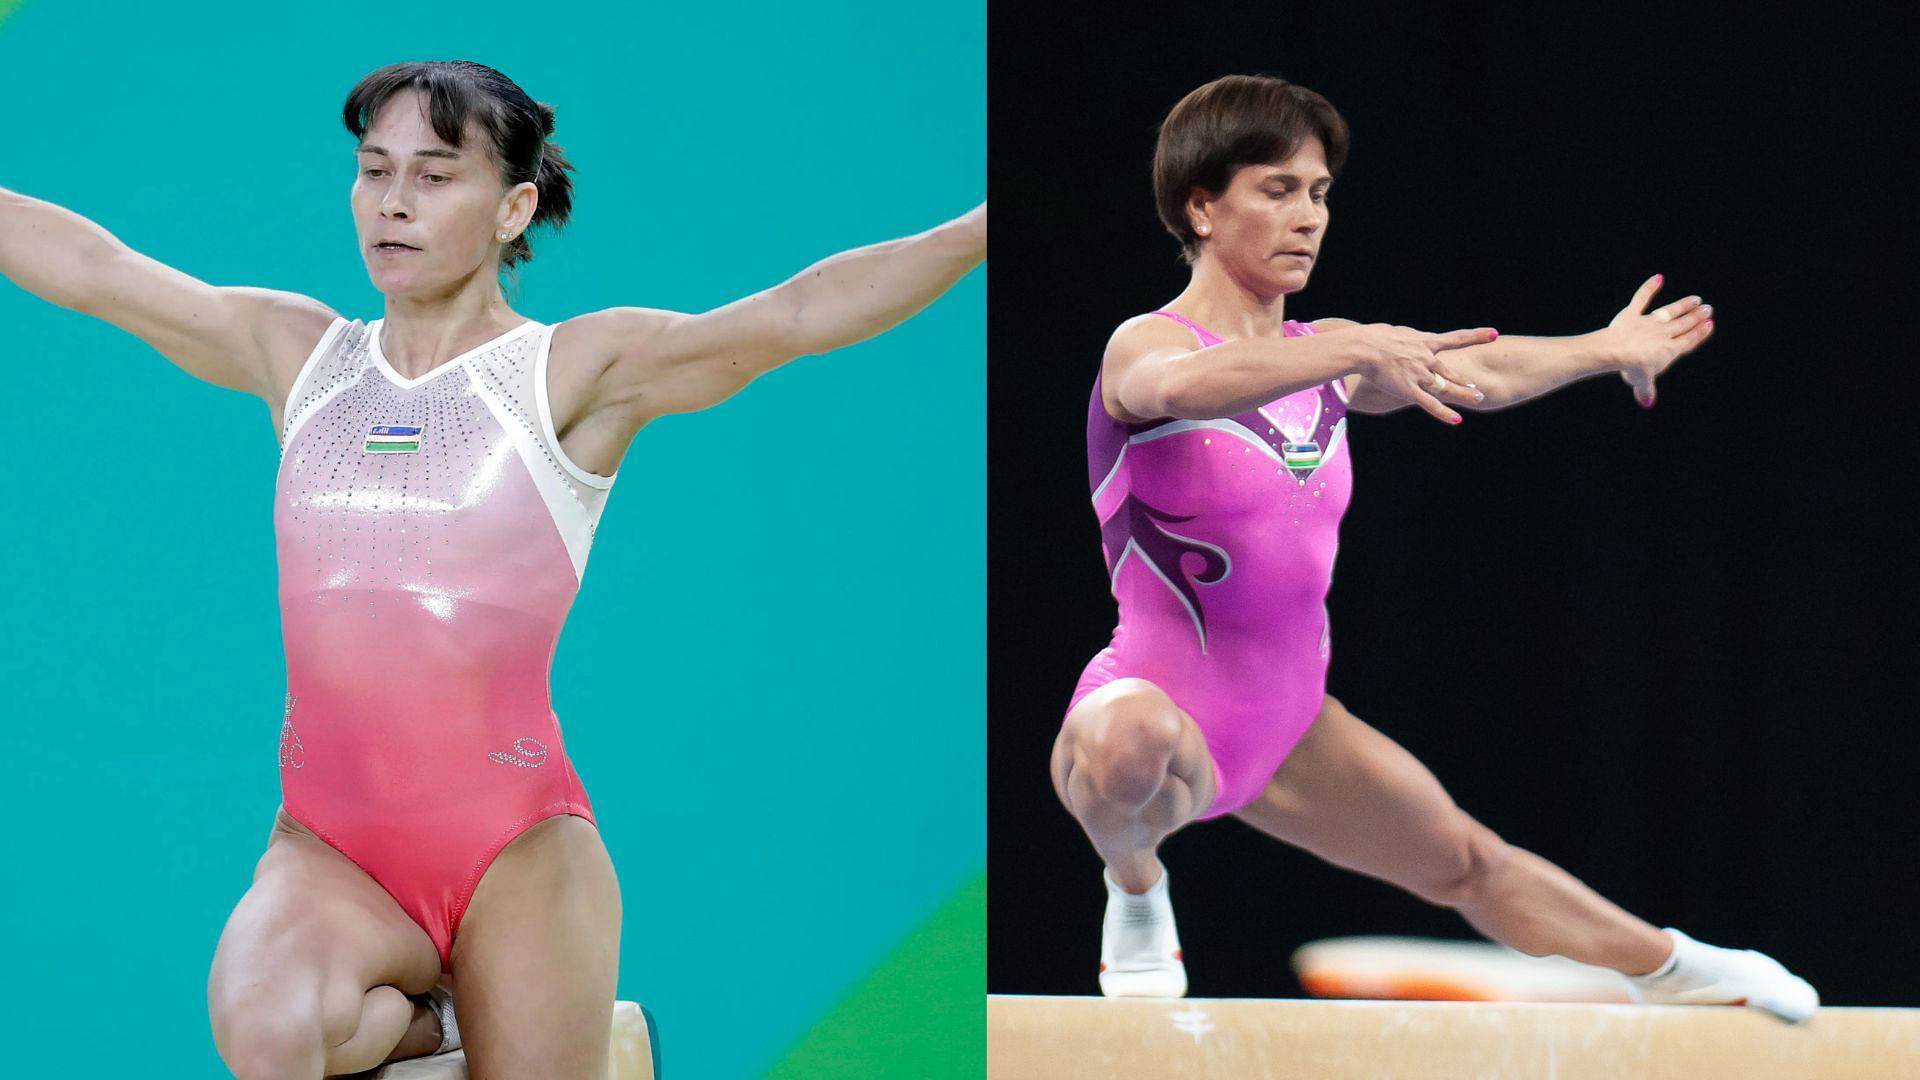 48 Year Old Gymnast Oksana Chusovitina Sets Eyes On Ninth Olympics Participation In Paris 2024 